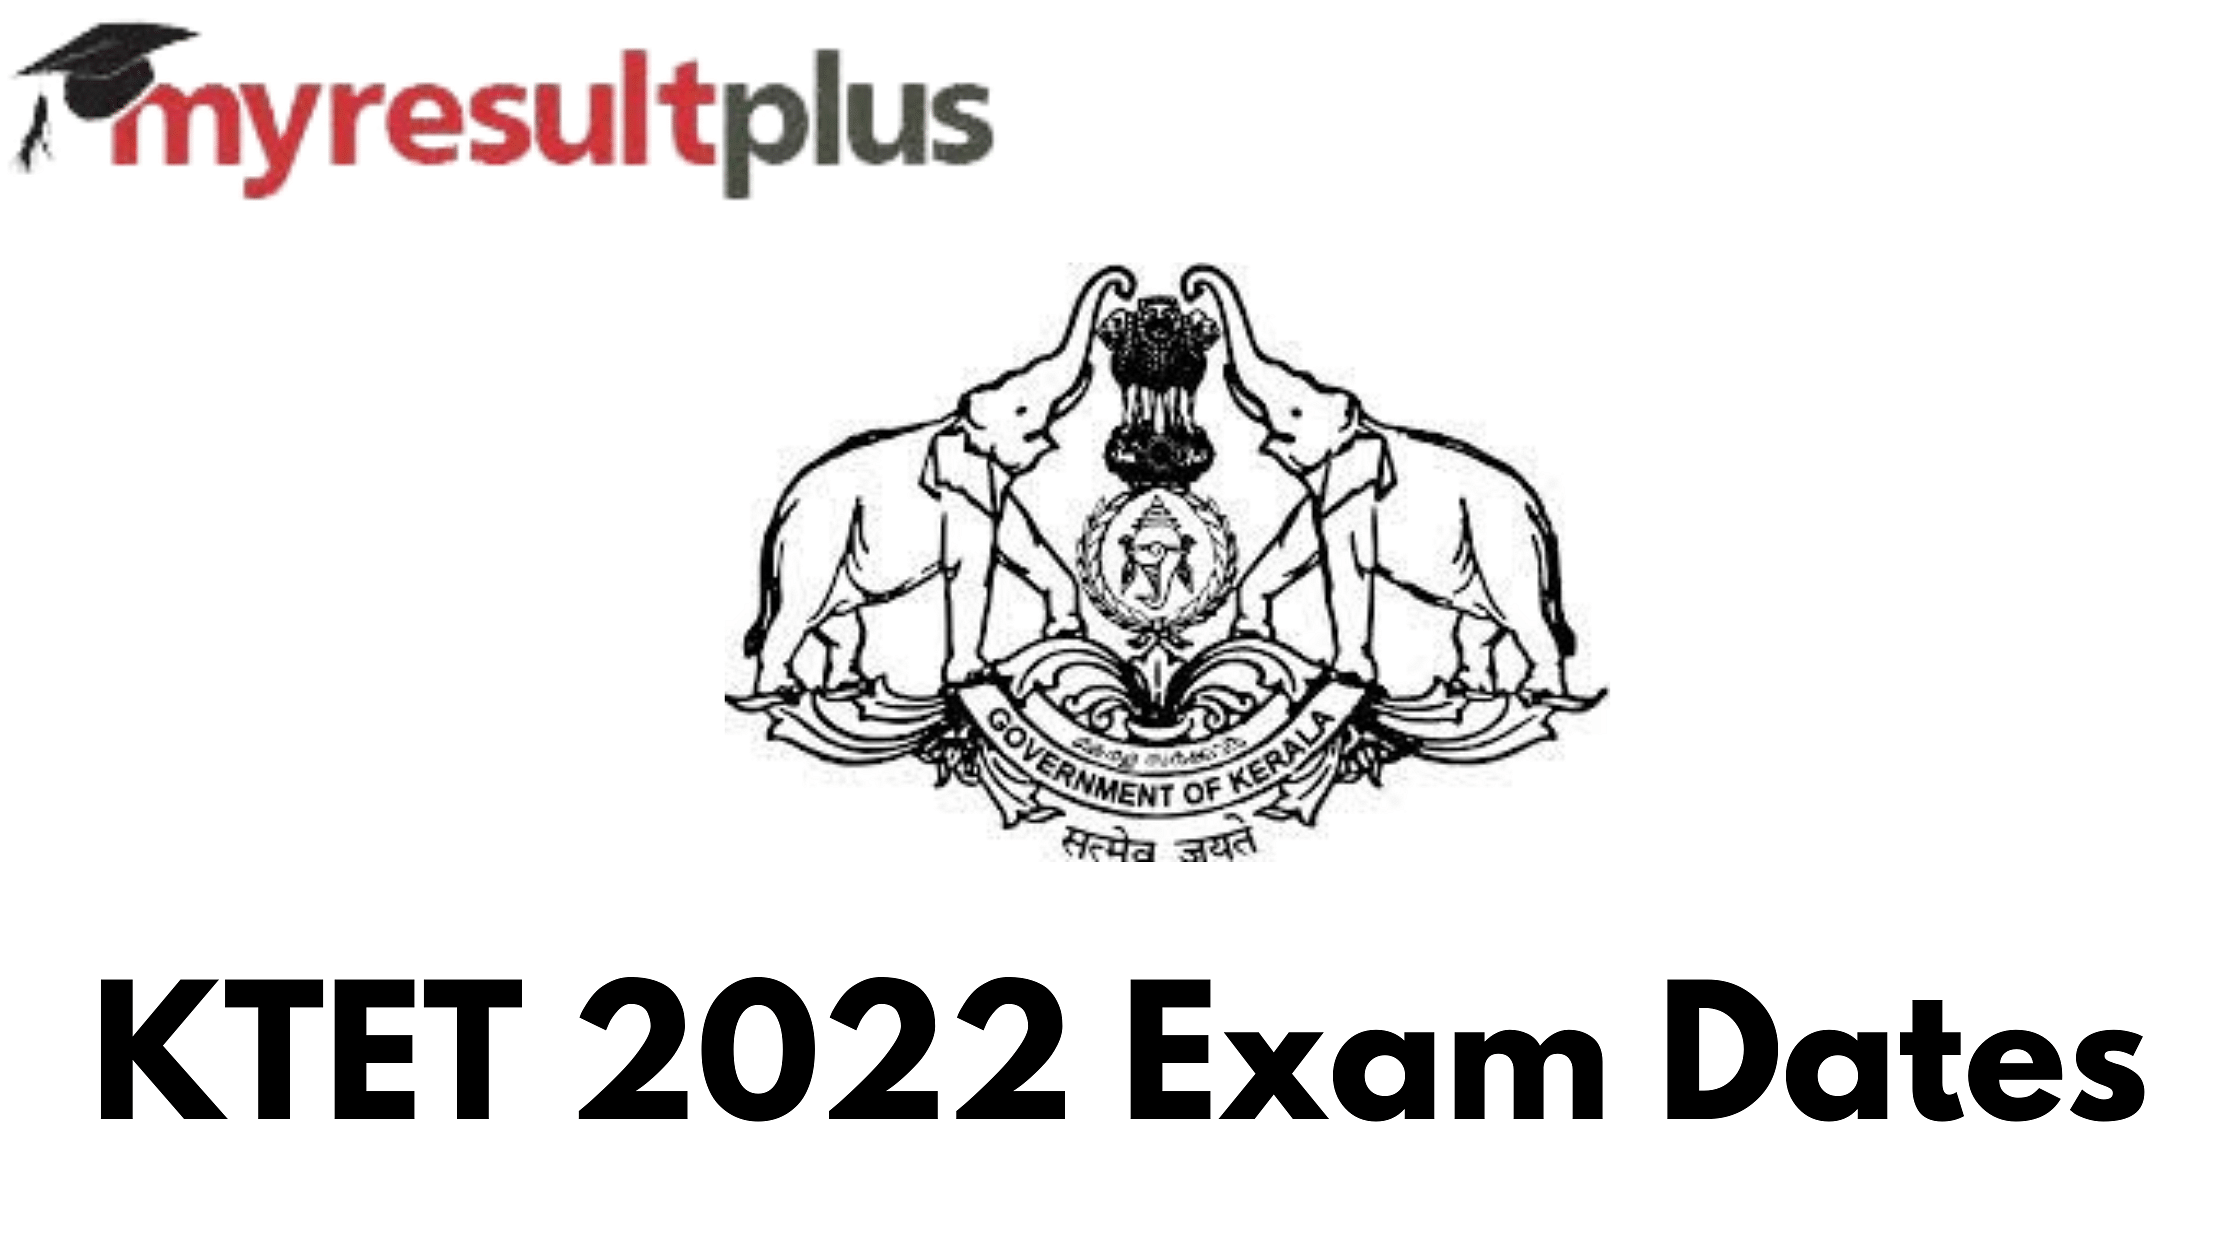 Ktet Exam 2022 Dates Declared, Check Latest Updates Here ktet.kerala